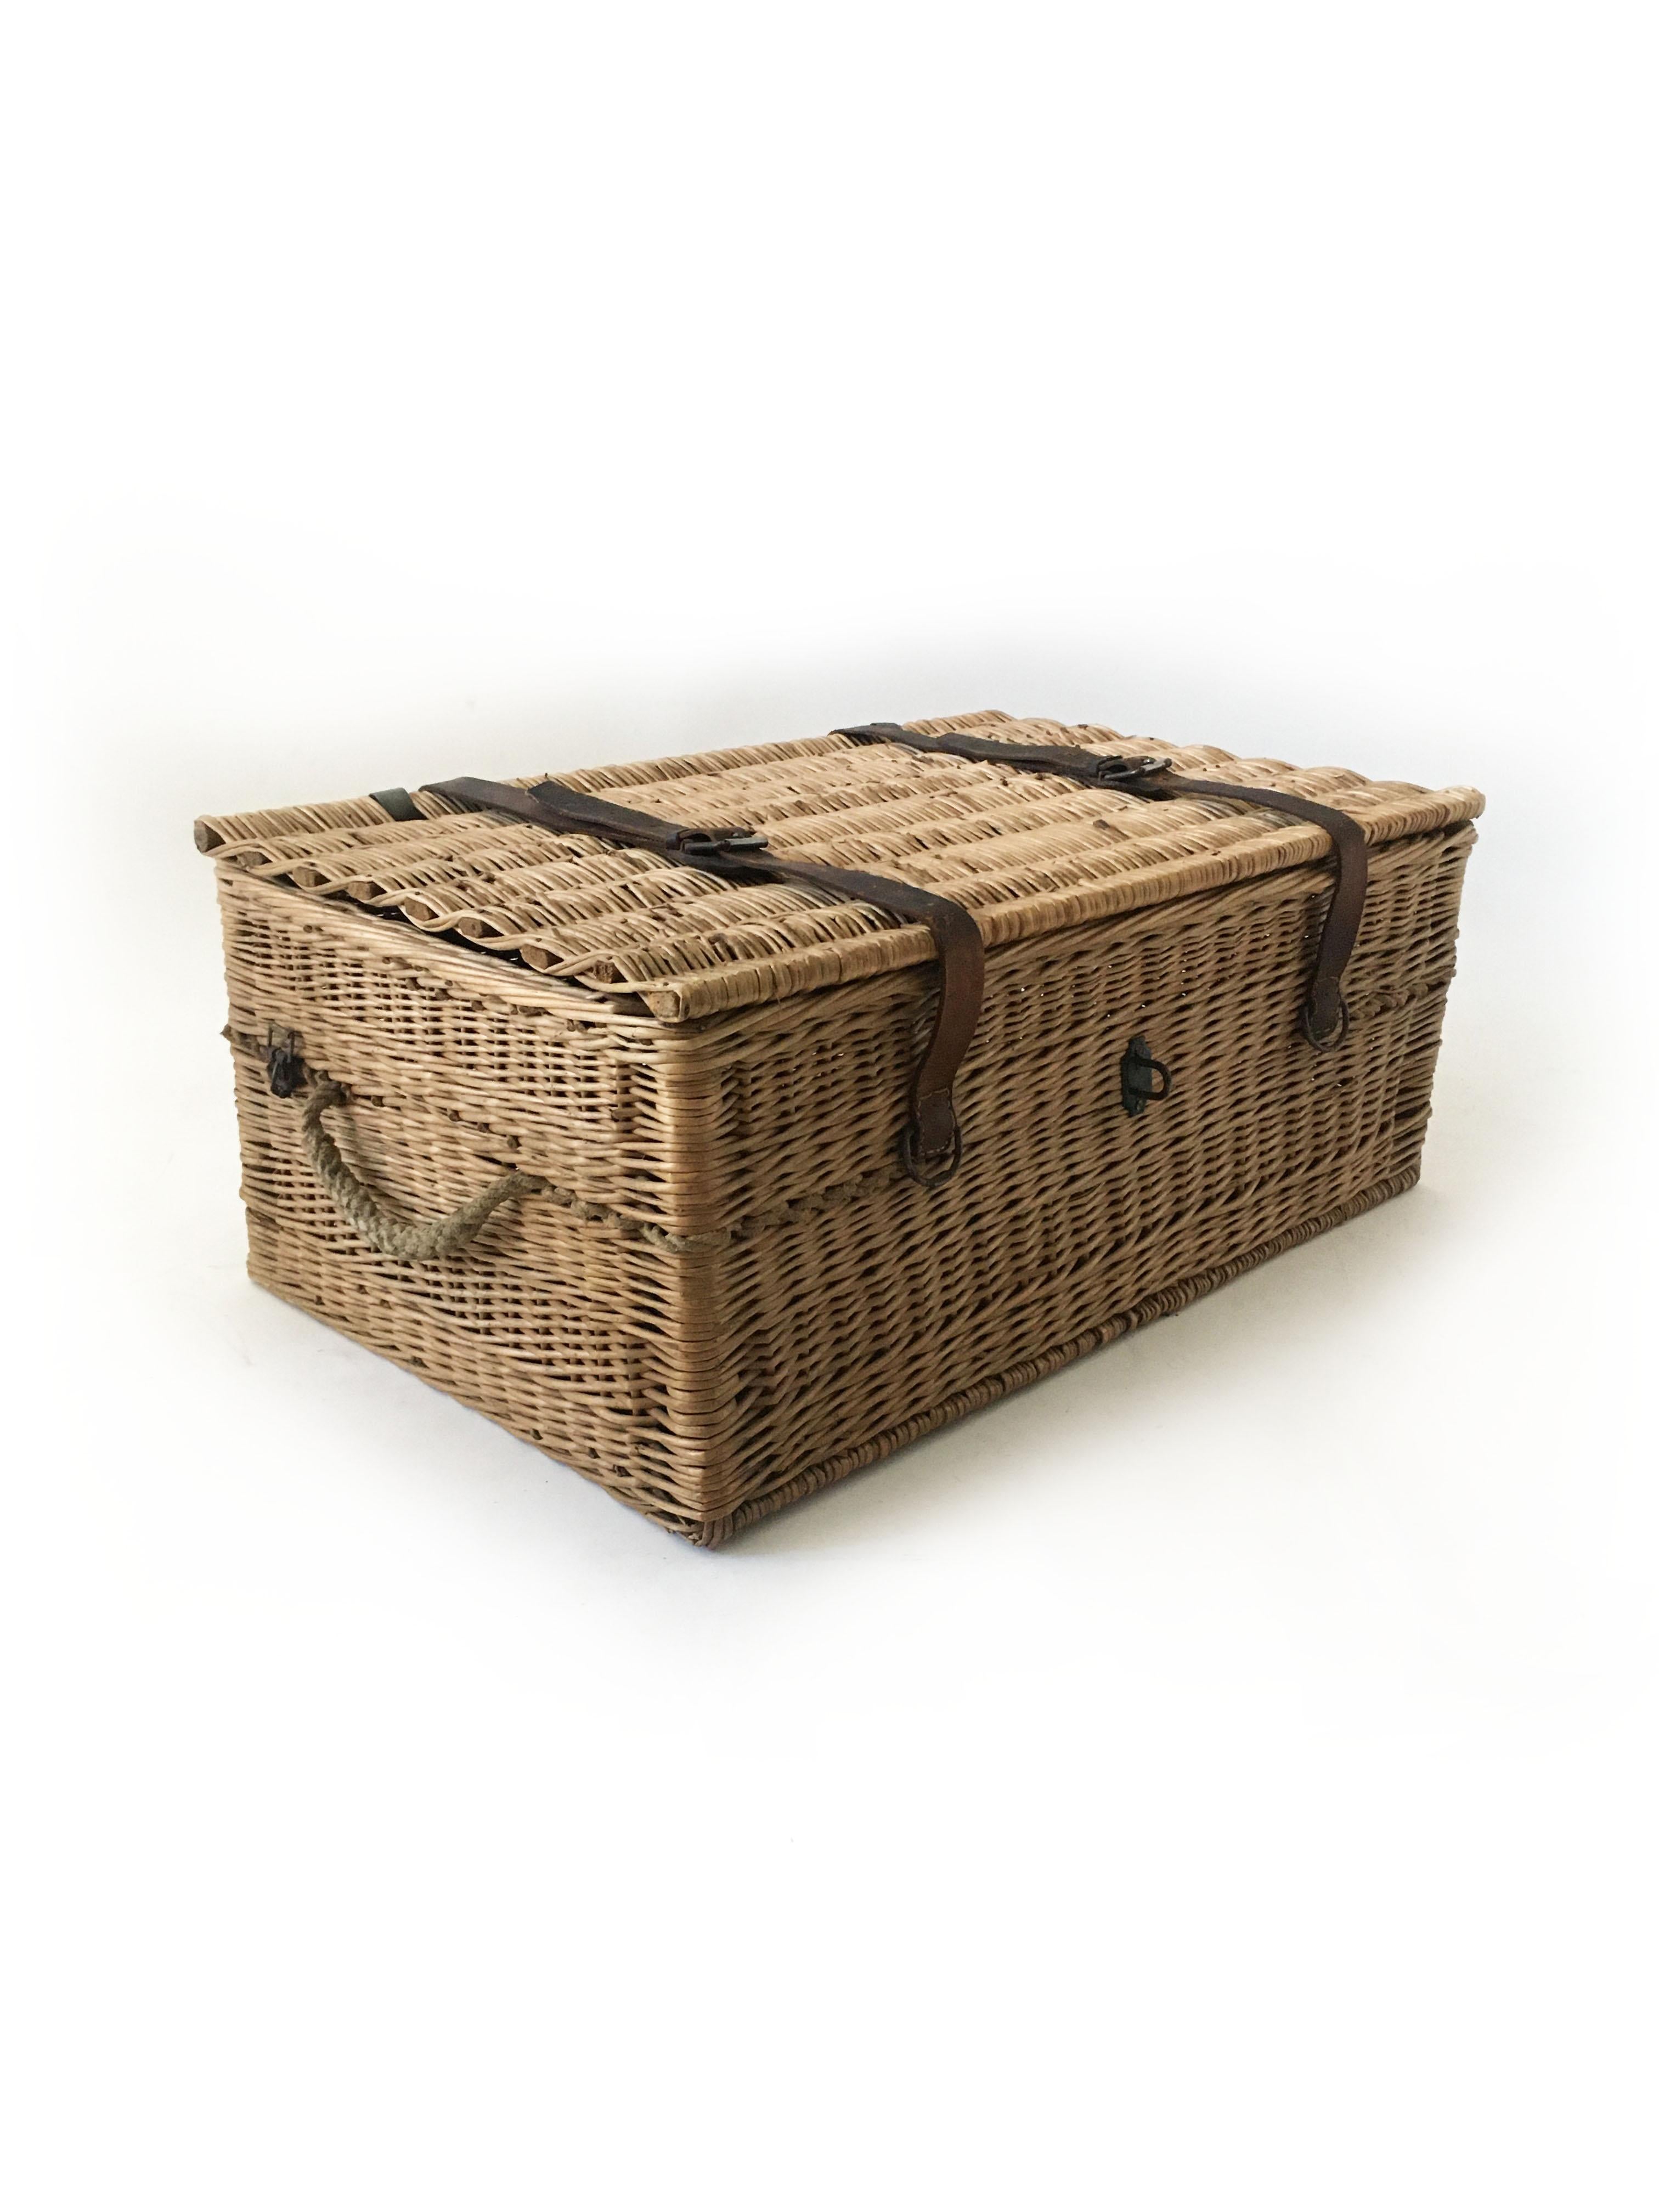 French Vintage Wicker Trunk, Wine Basket from Bordeaux, France, 1930s